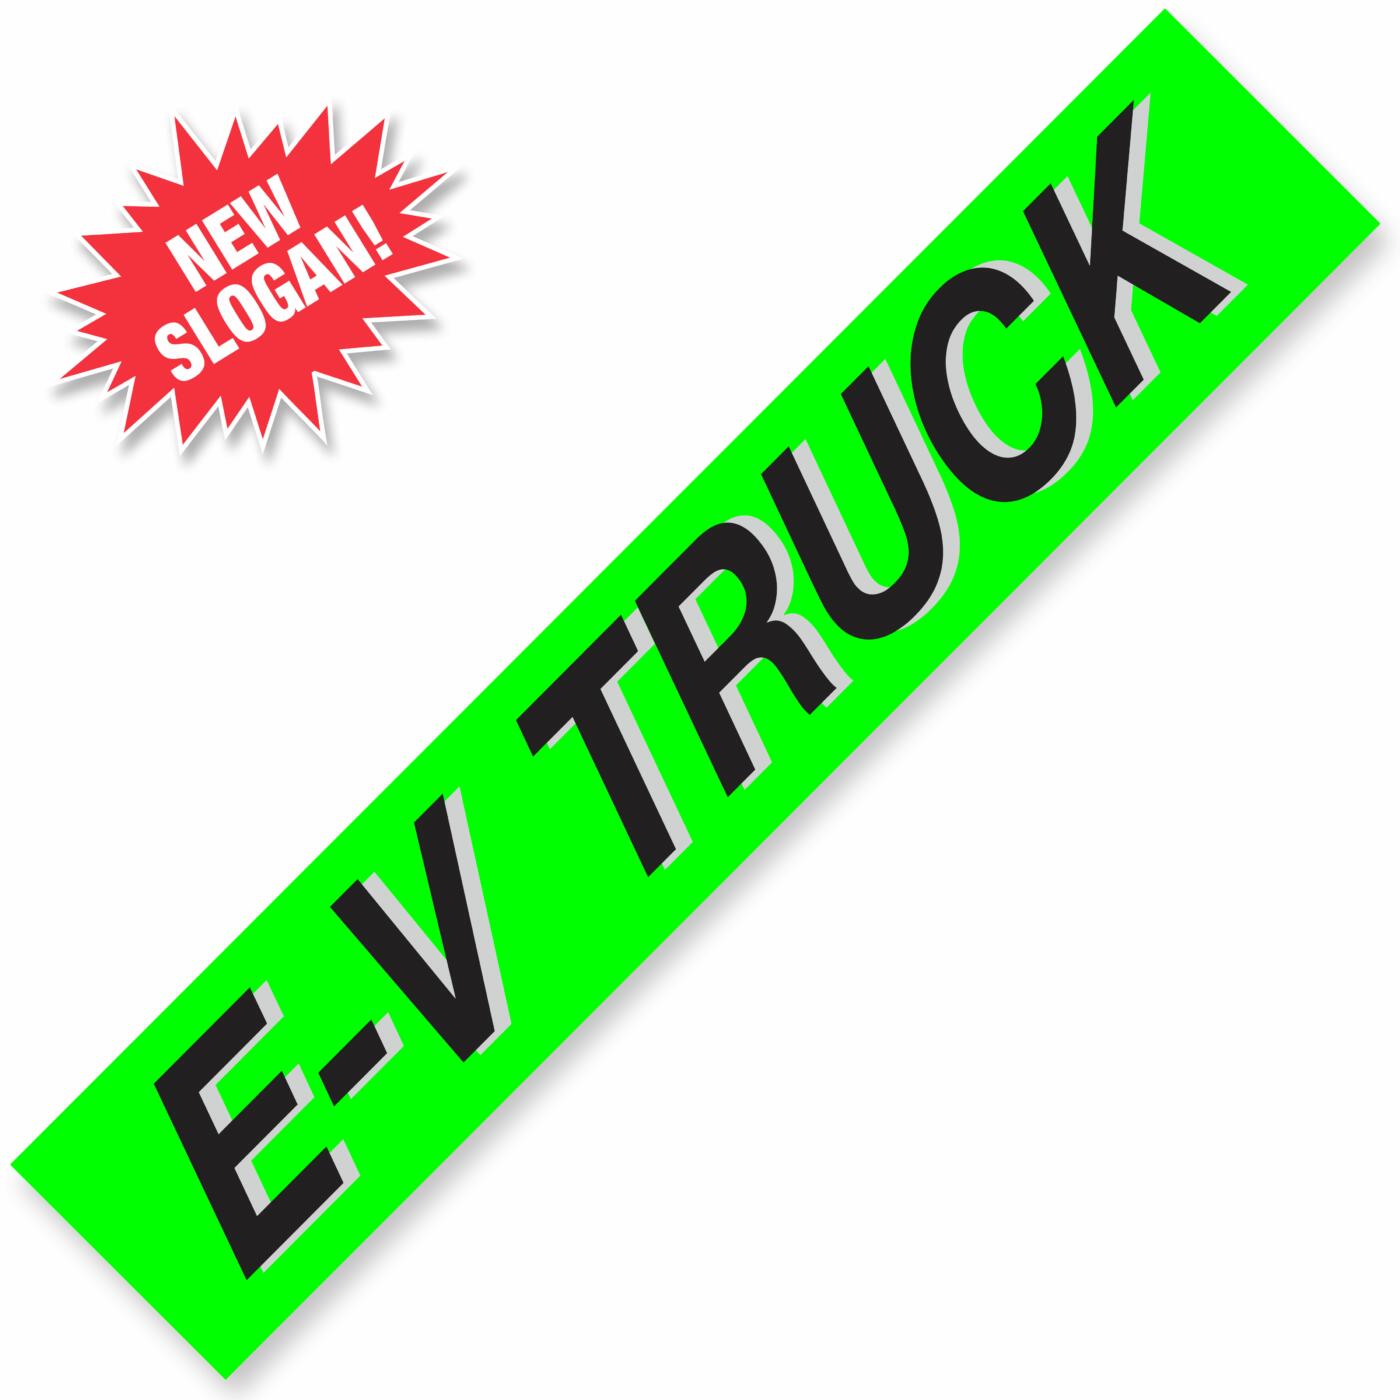 E-V TRUCK Windshield Slogan Signs